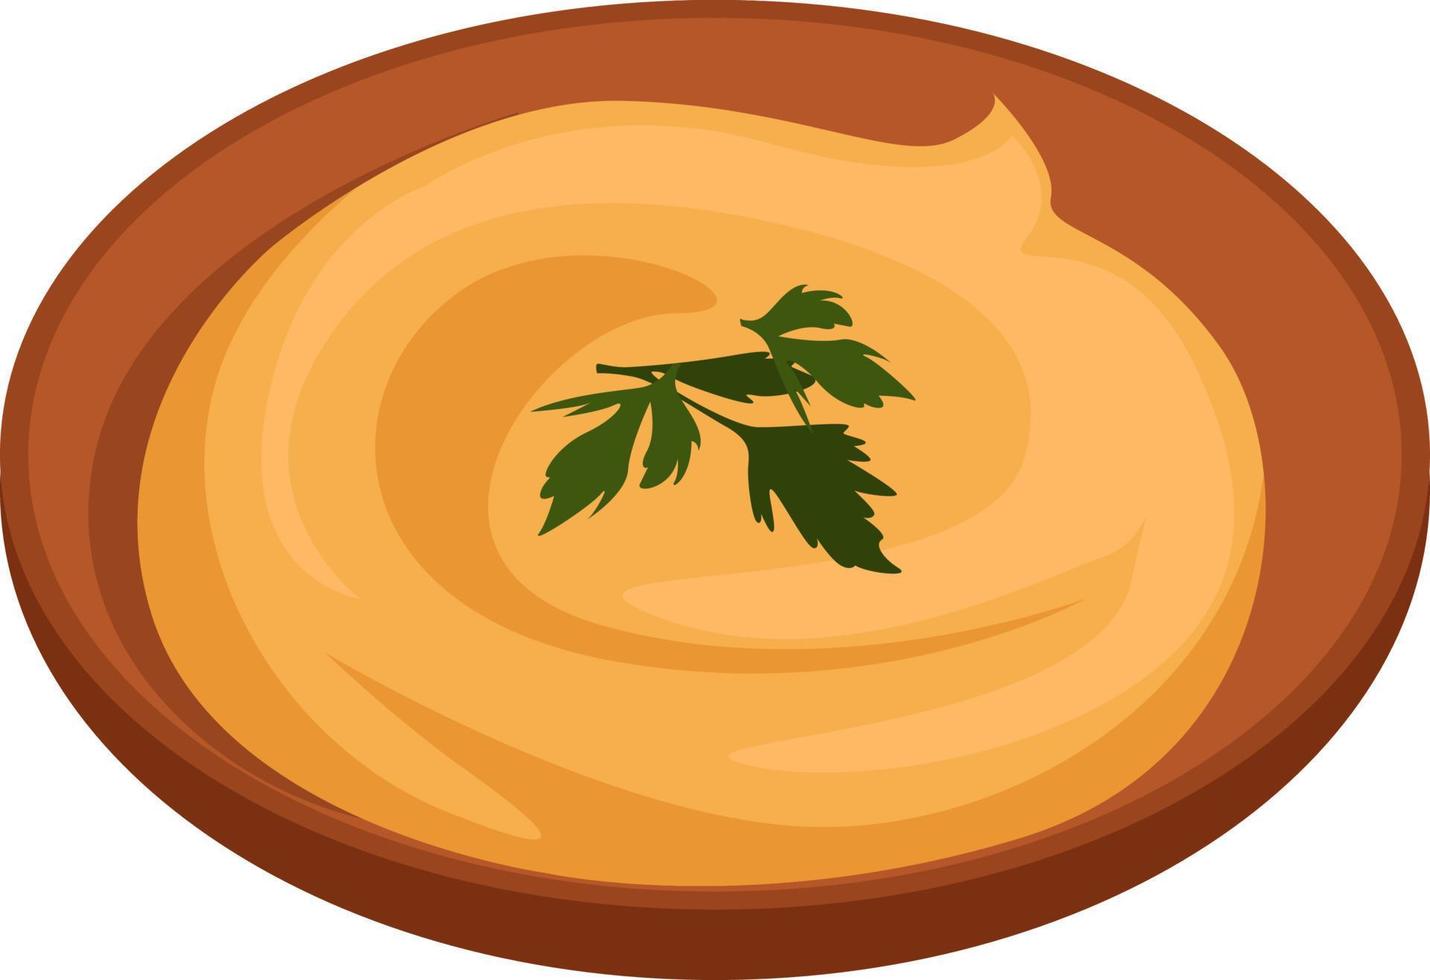 Tasty hummus, illustration, vector on white background.